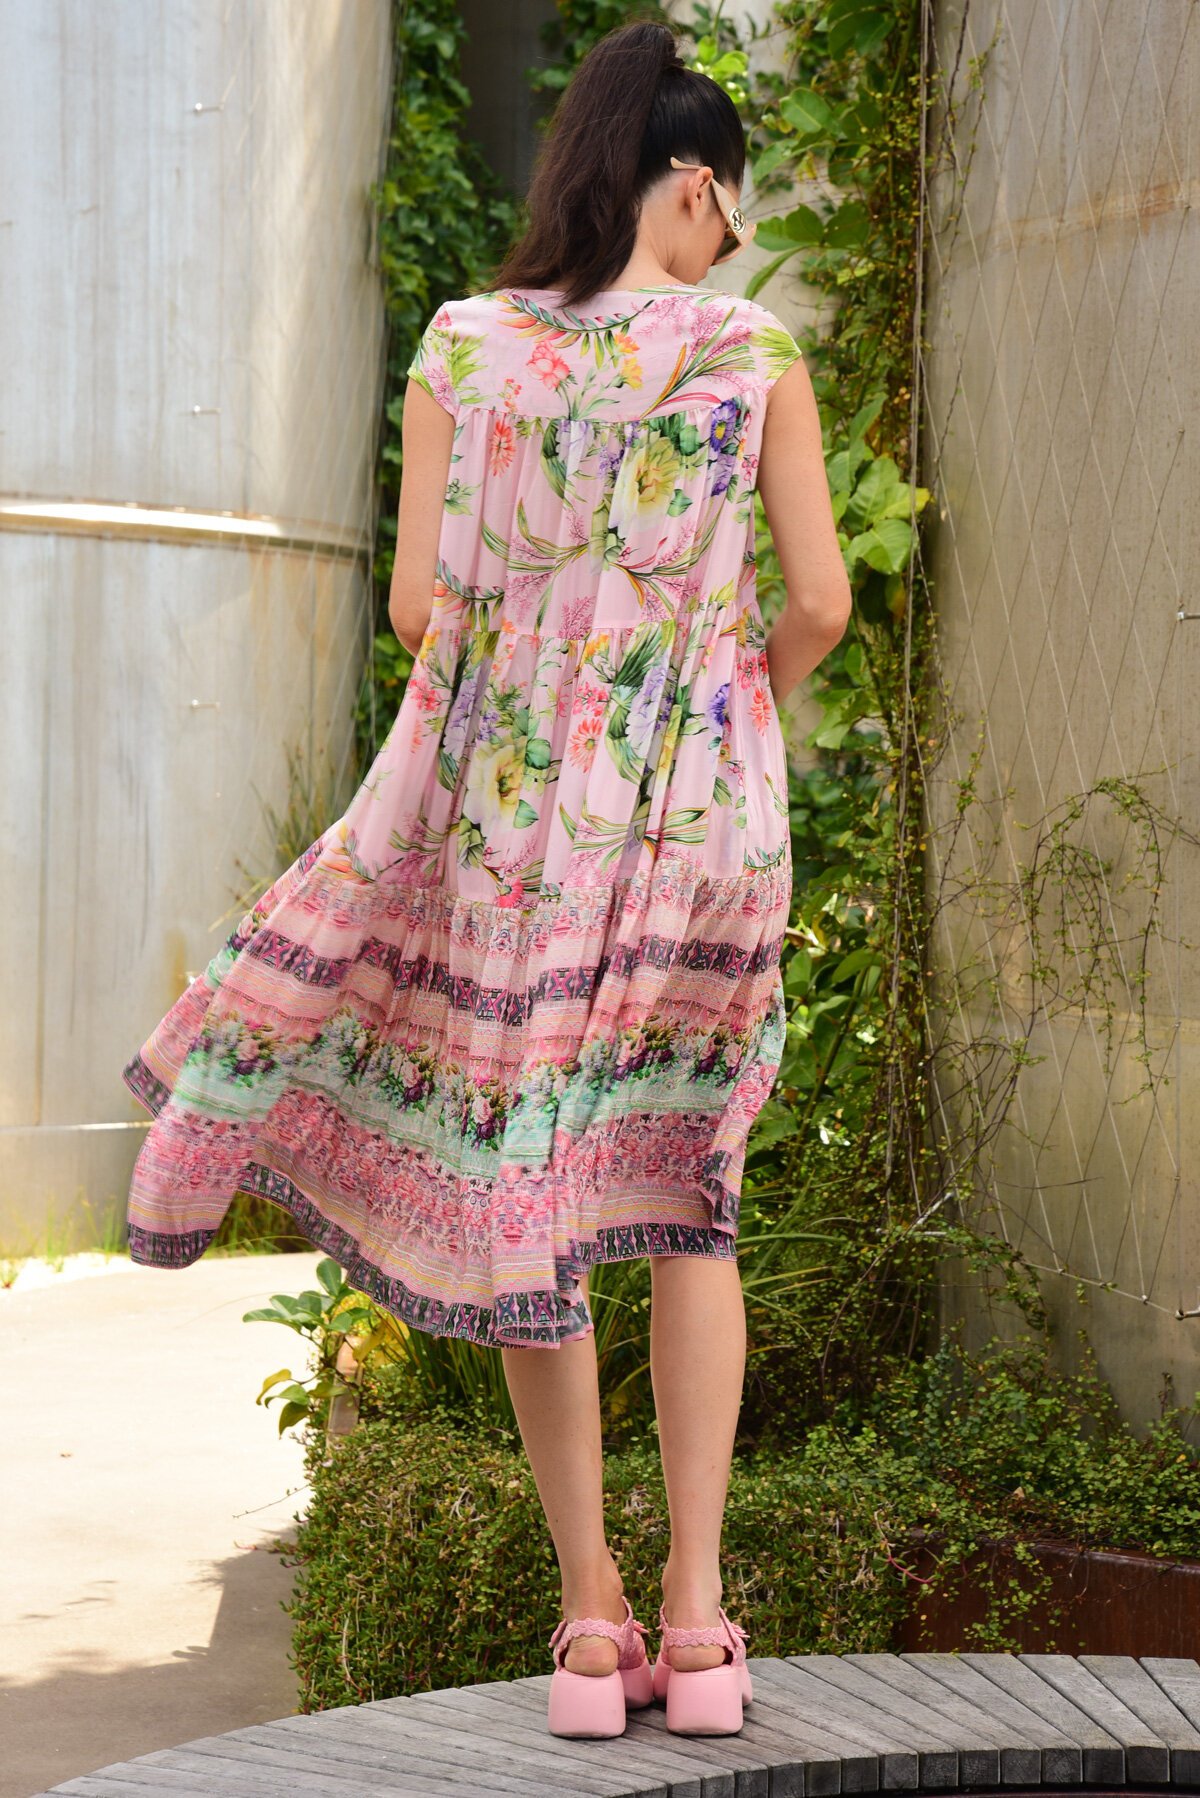 DRESS BOSS Dress - Curate : Trelise Cooper Online - FLOWER SHOW CURATE ...